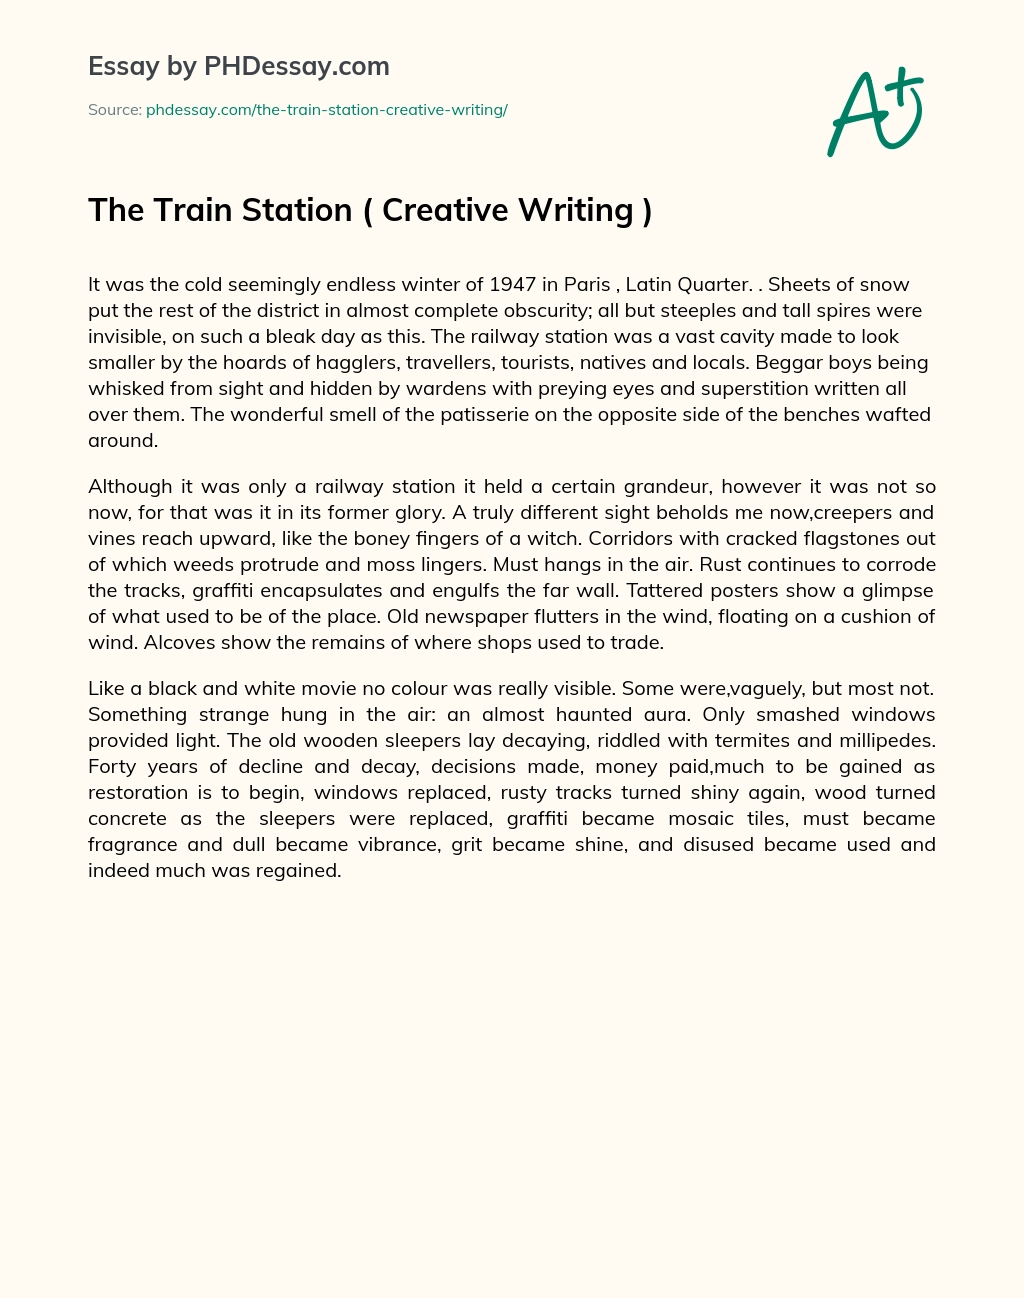 The Train Station ( Creative Writing ) essay